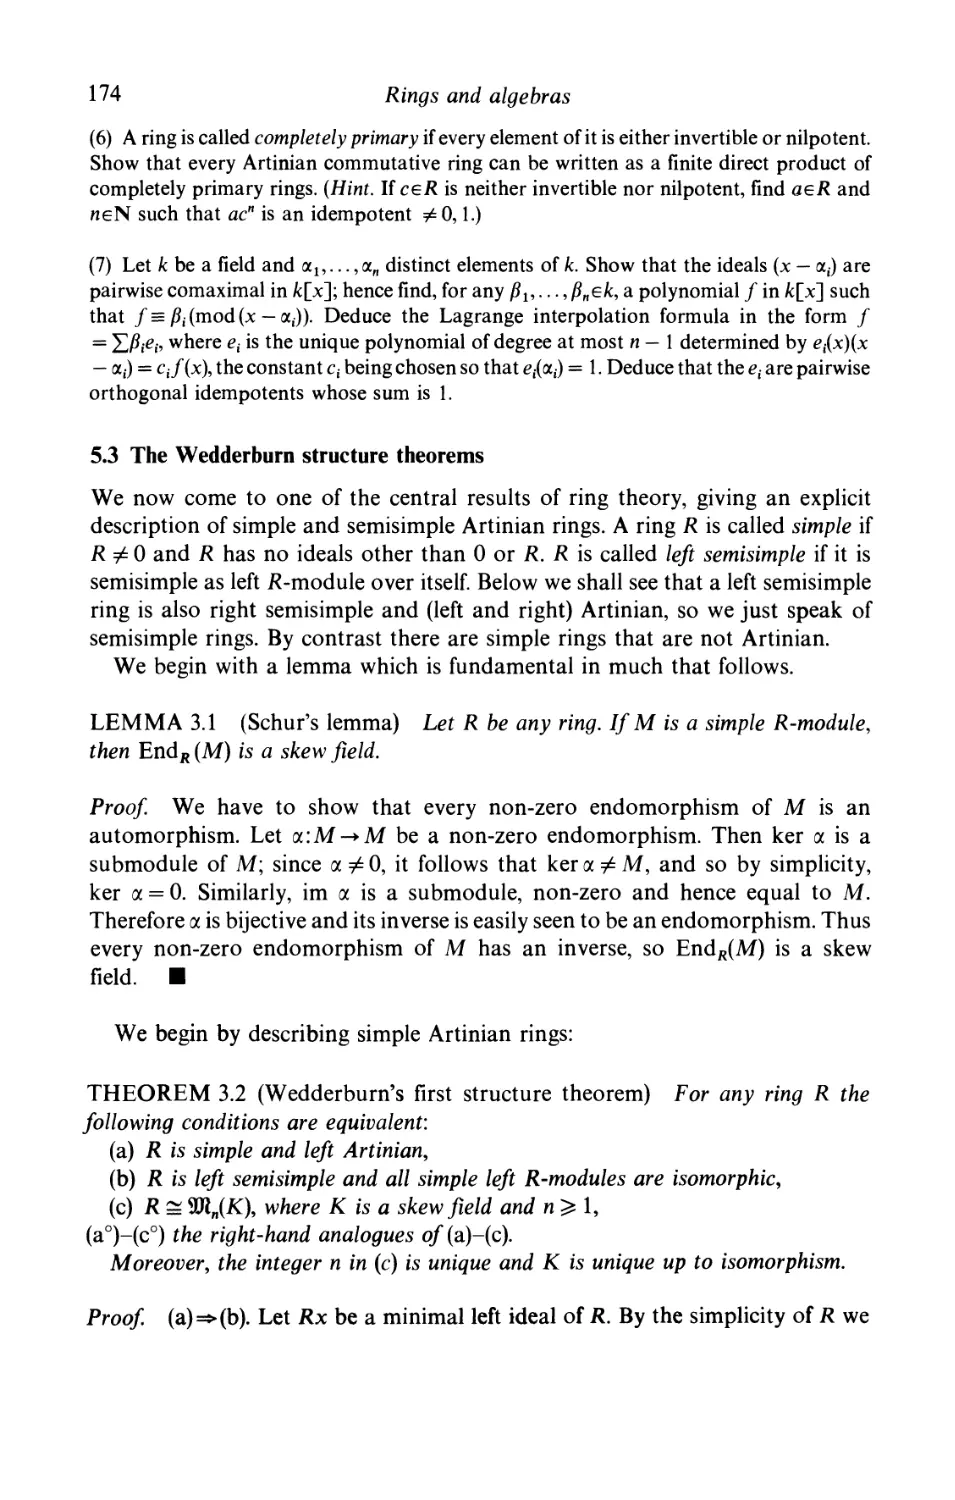 5.3 The Wedderburn structure theorems